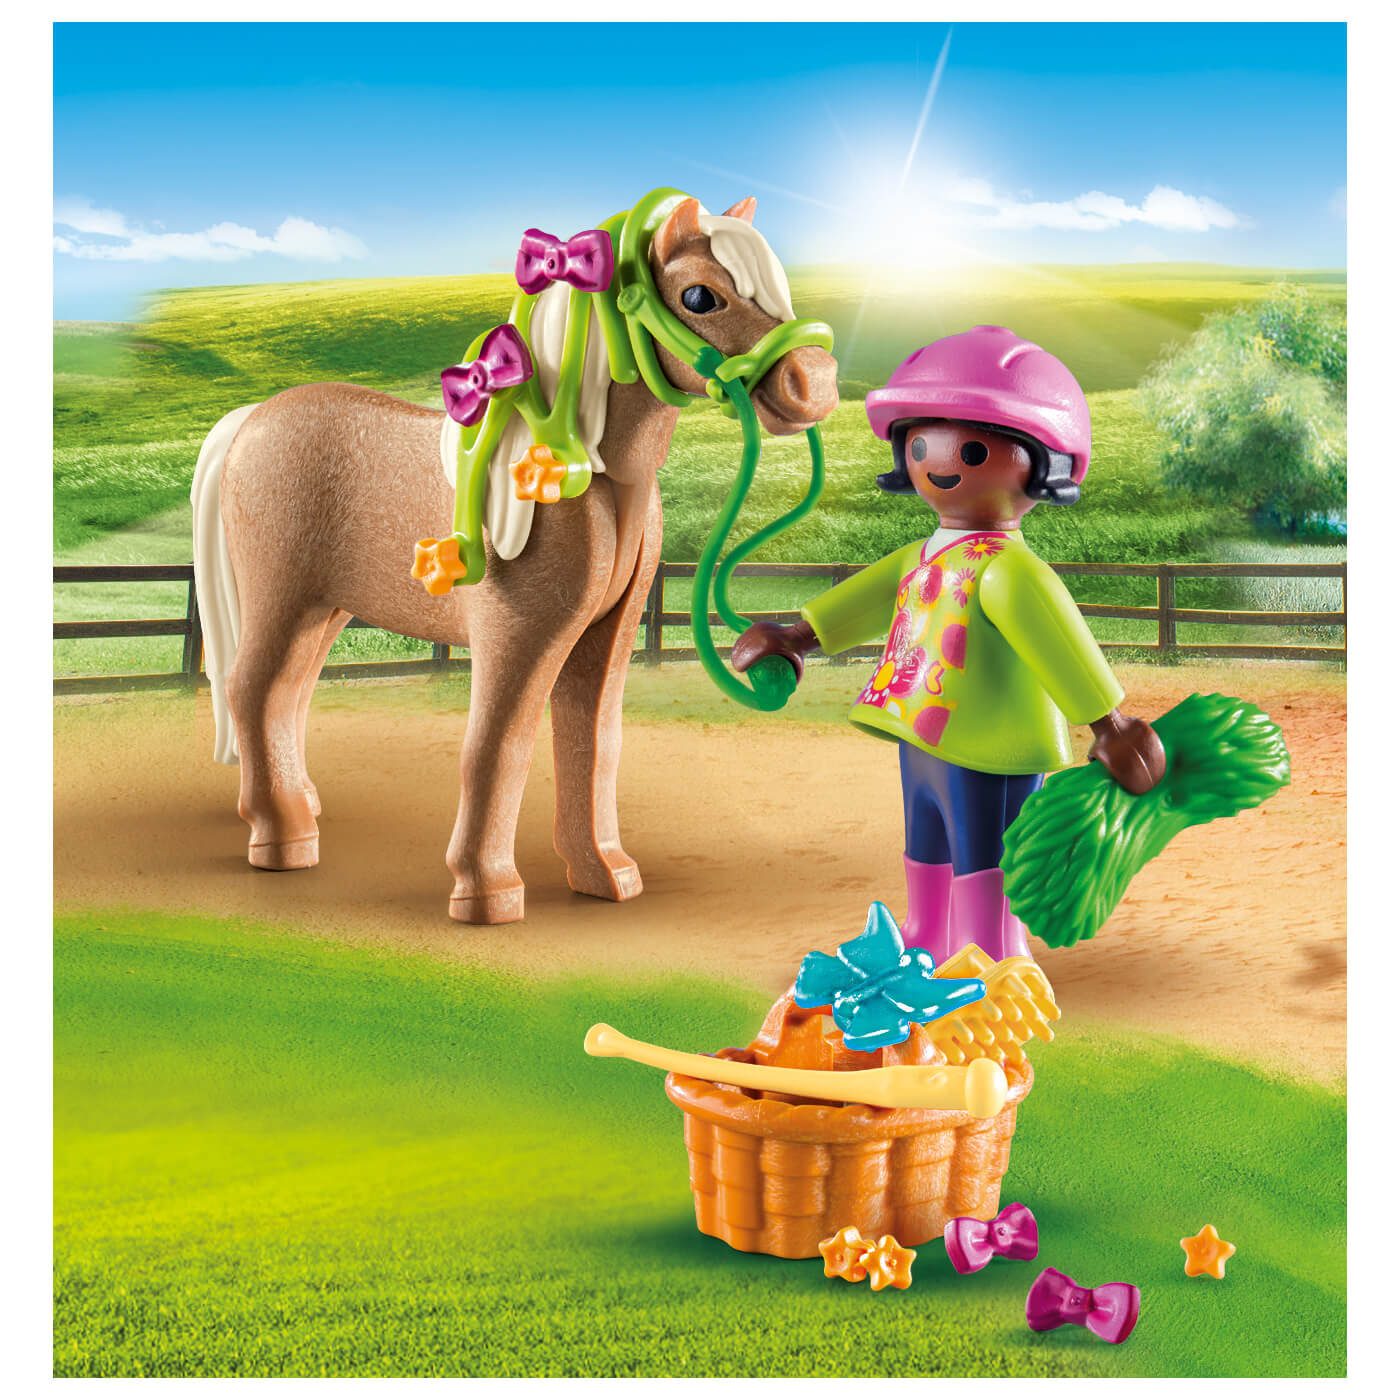 PLAYMOBIL Special Plus Girl with Pony (70060)